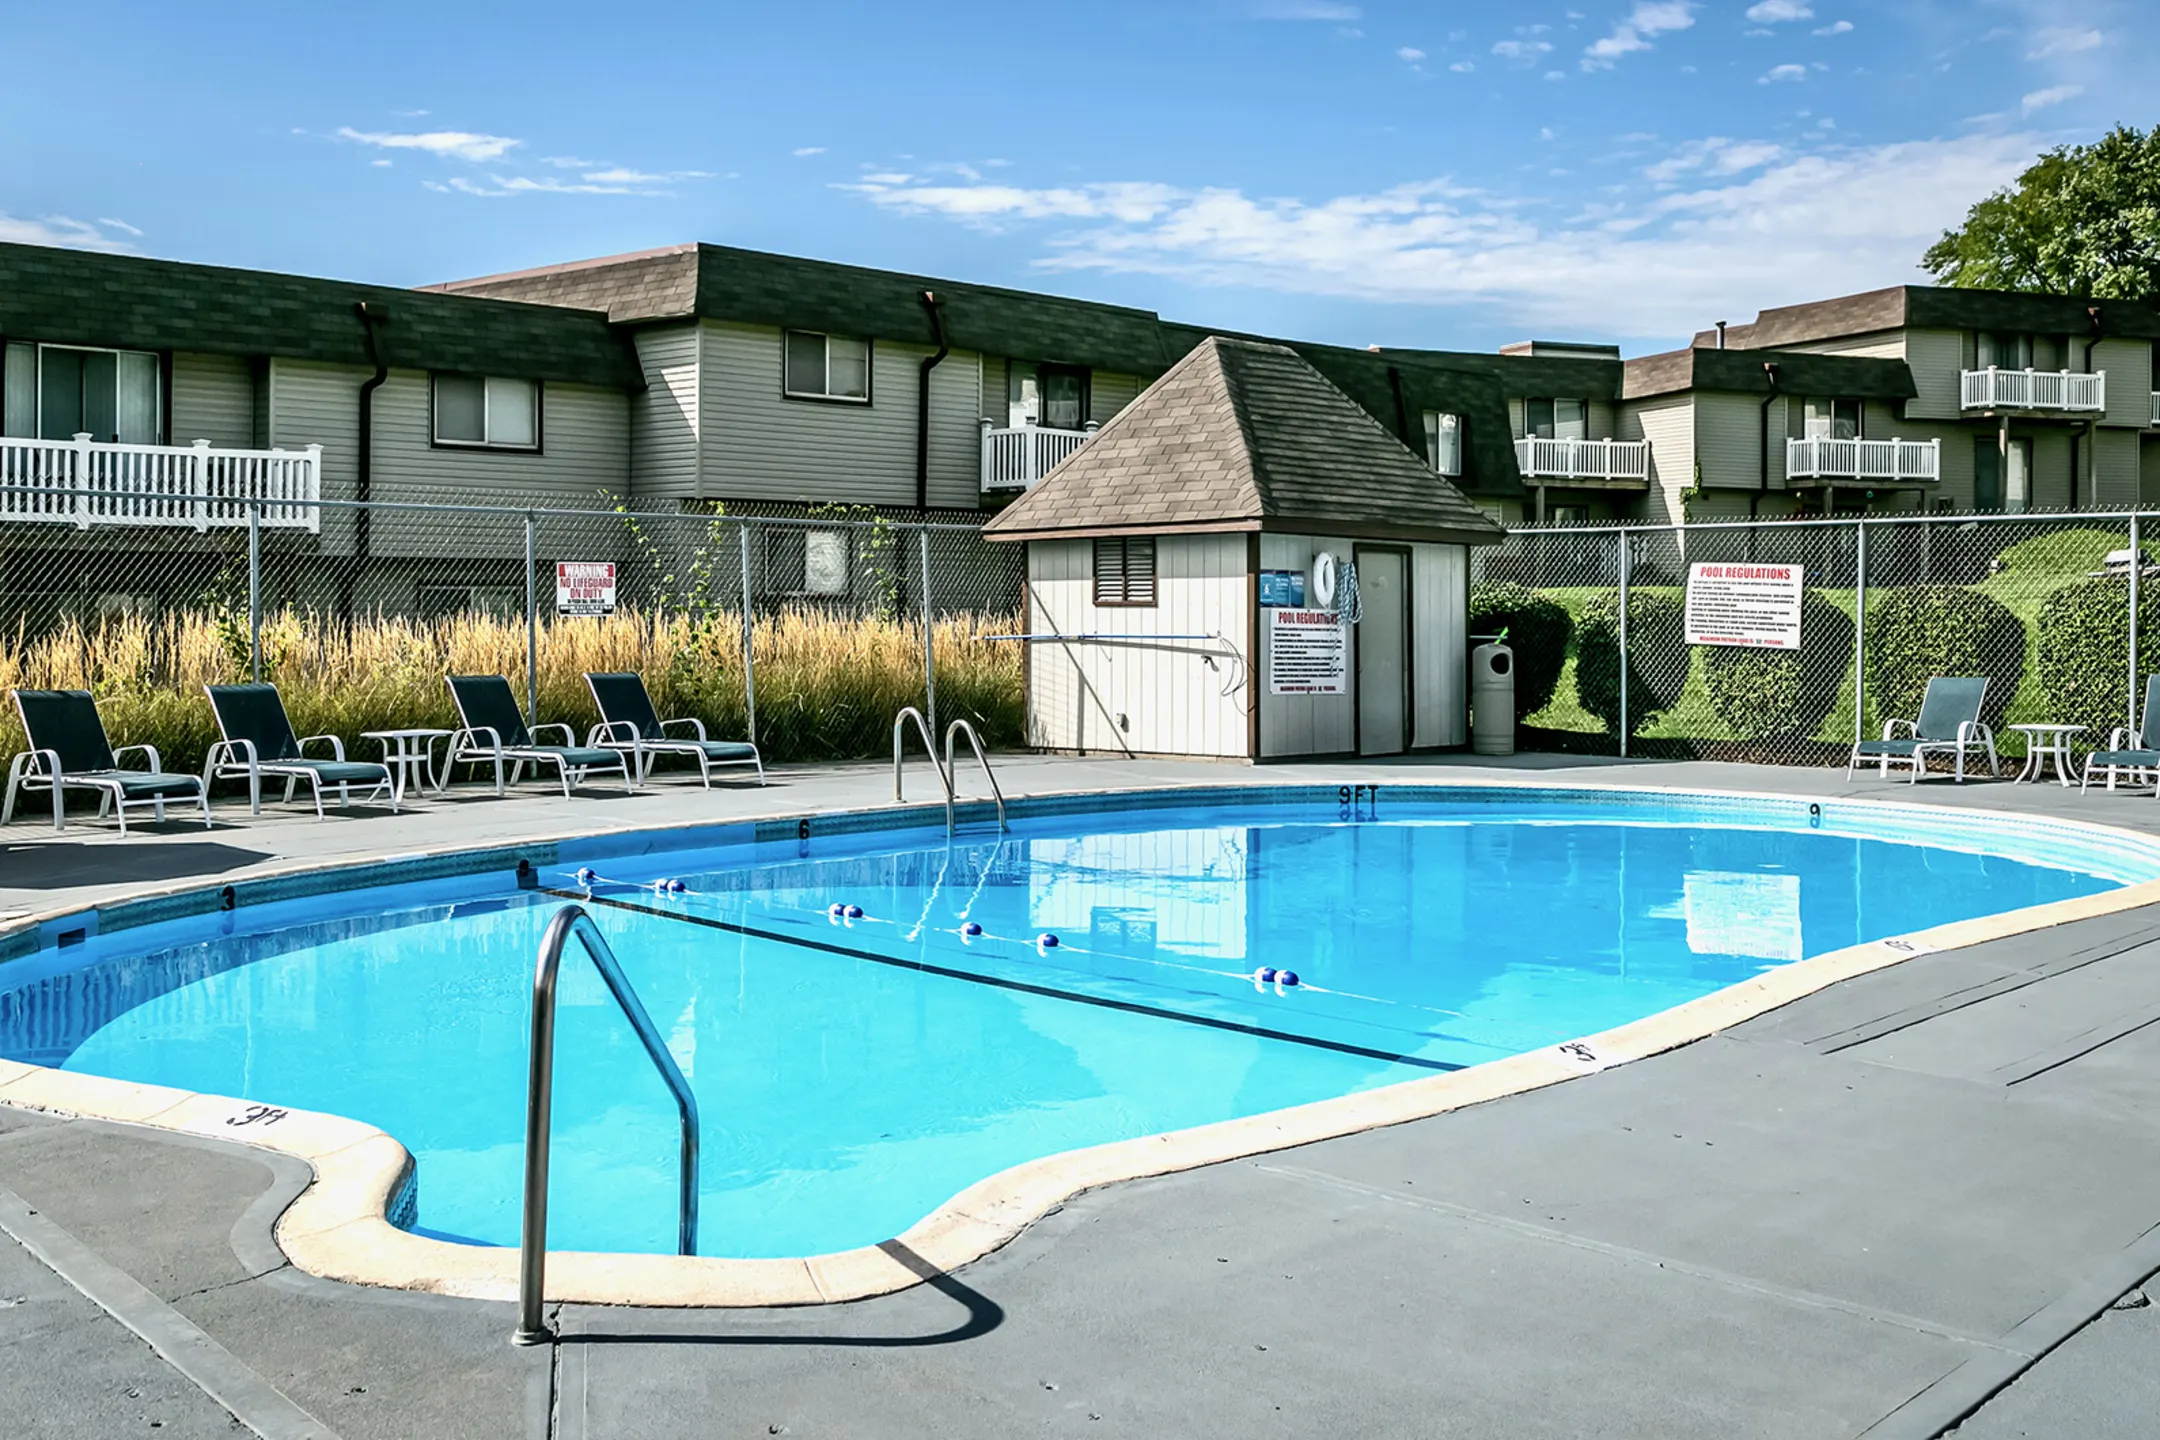 Pool - Fairway Apartments - Omaha, NE